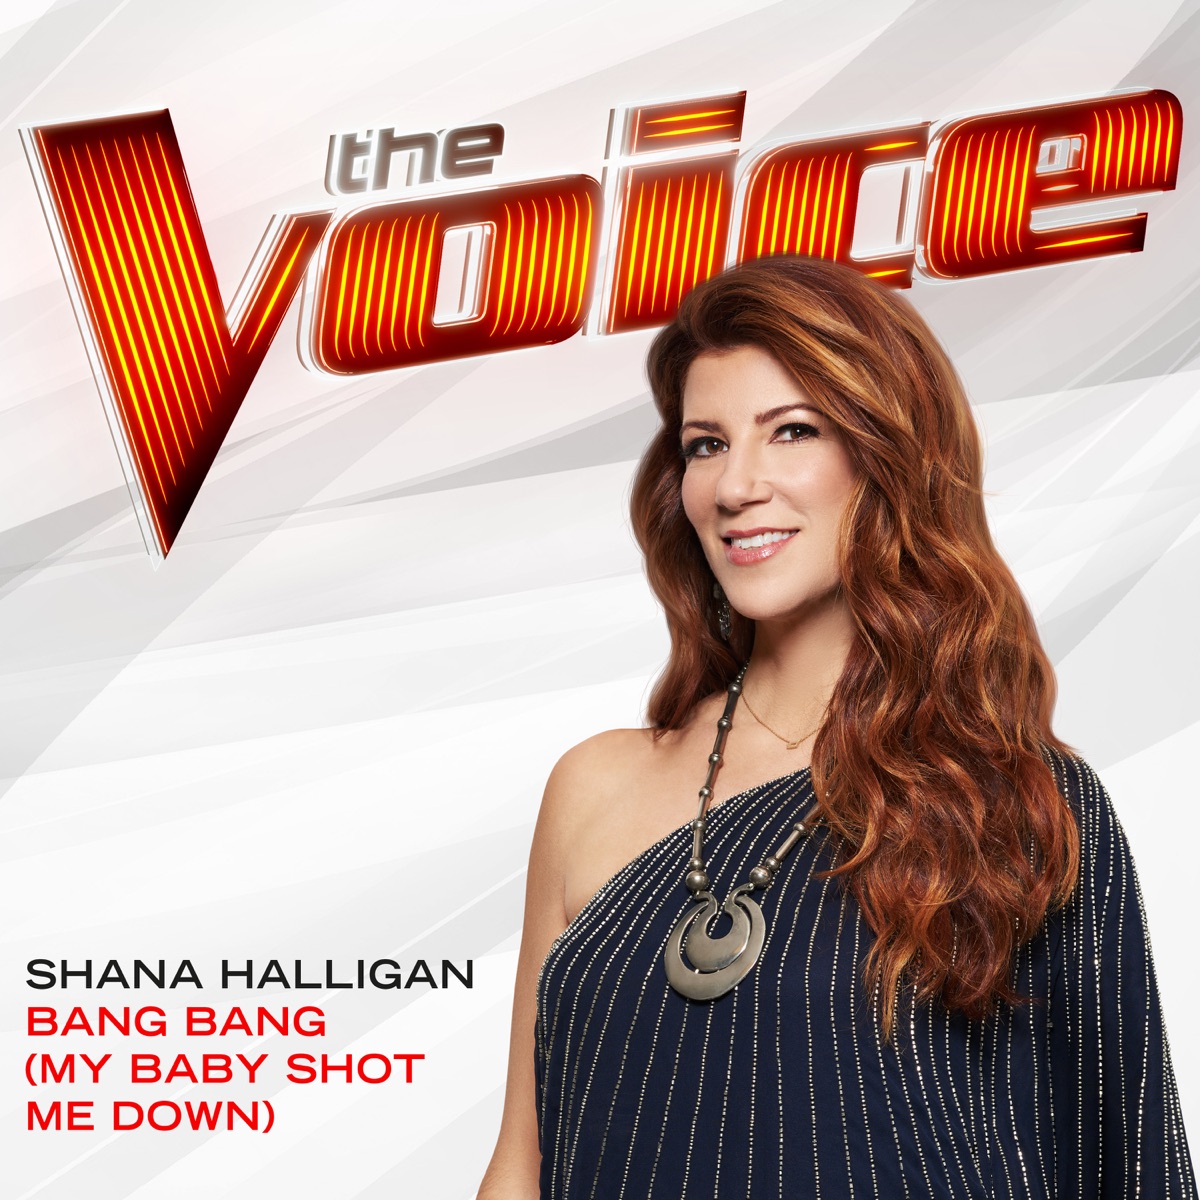 Bang Bang (My Baby Shot Me Down) [The Voice Performance] - Single - Album  by Shana Halligan - Apple Music